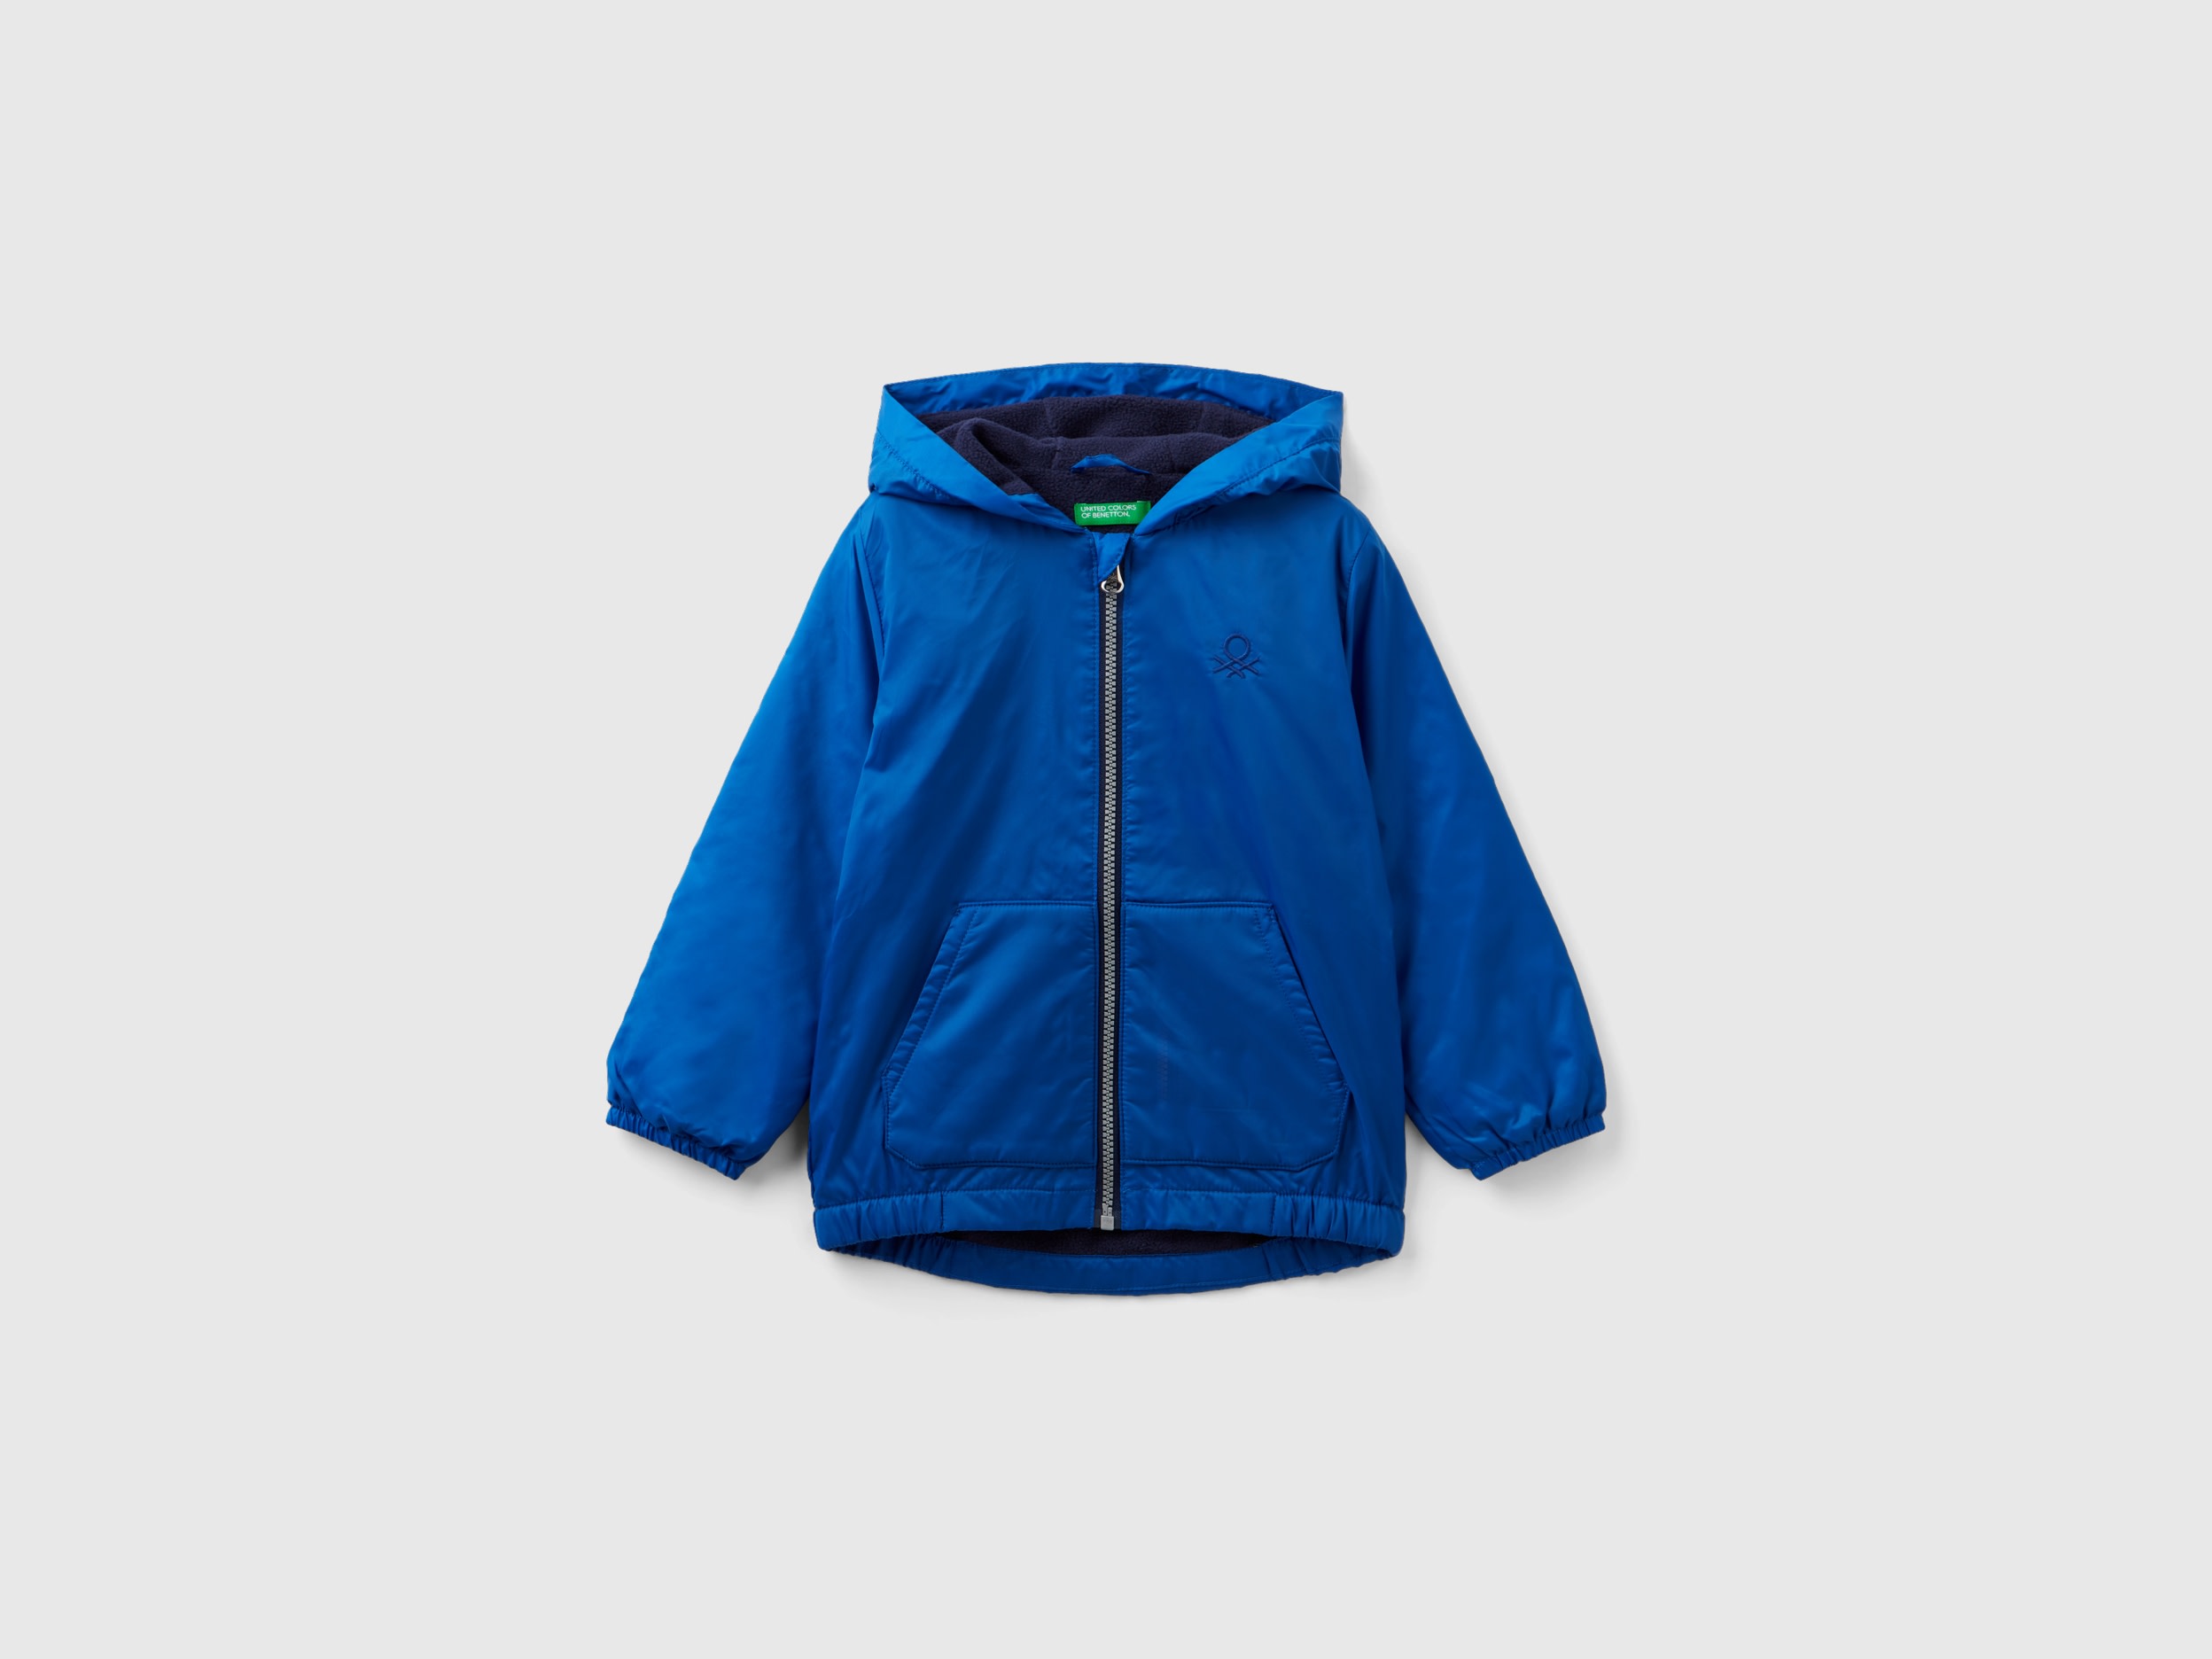 Benetton, Jacket With Oversized Hood, size 18-24, Bright Blue, Kids